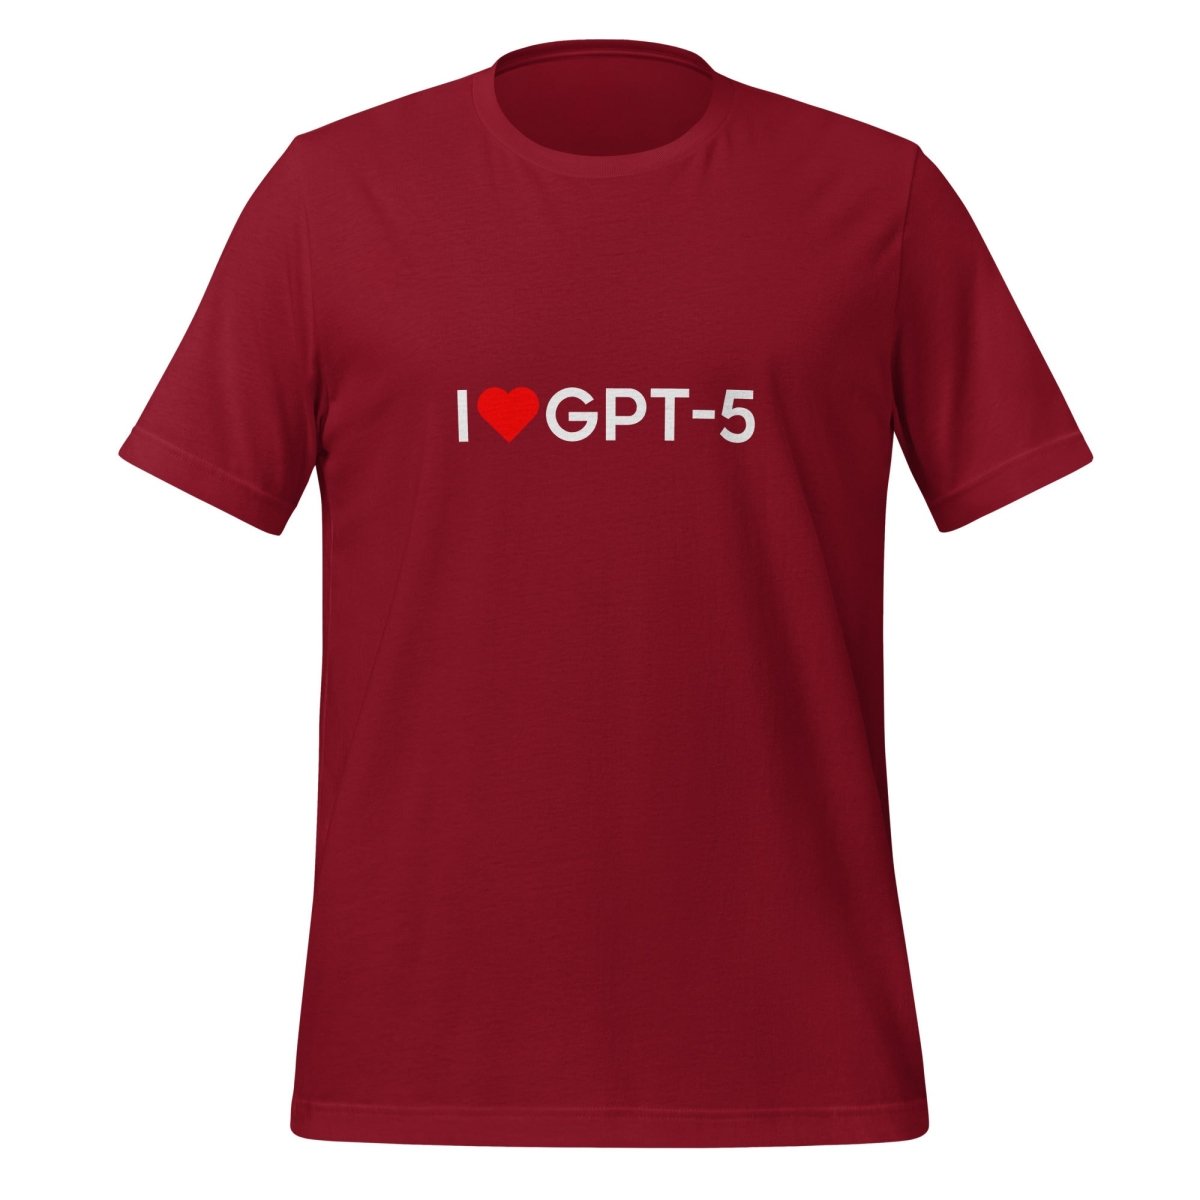 I Heart GPT - 5 T - Shirt (unisex) - Cardinal - AI Store